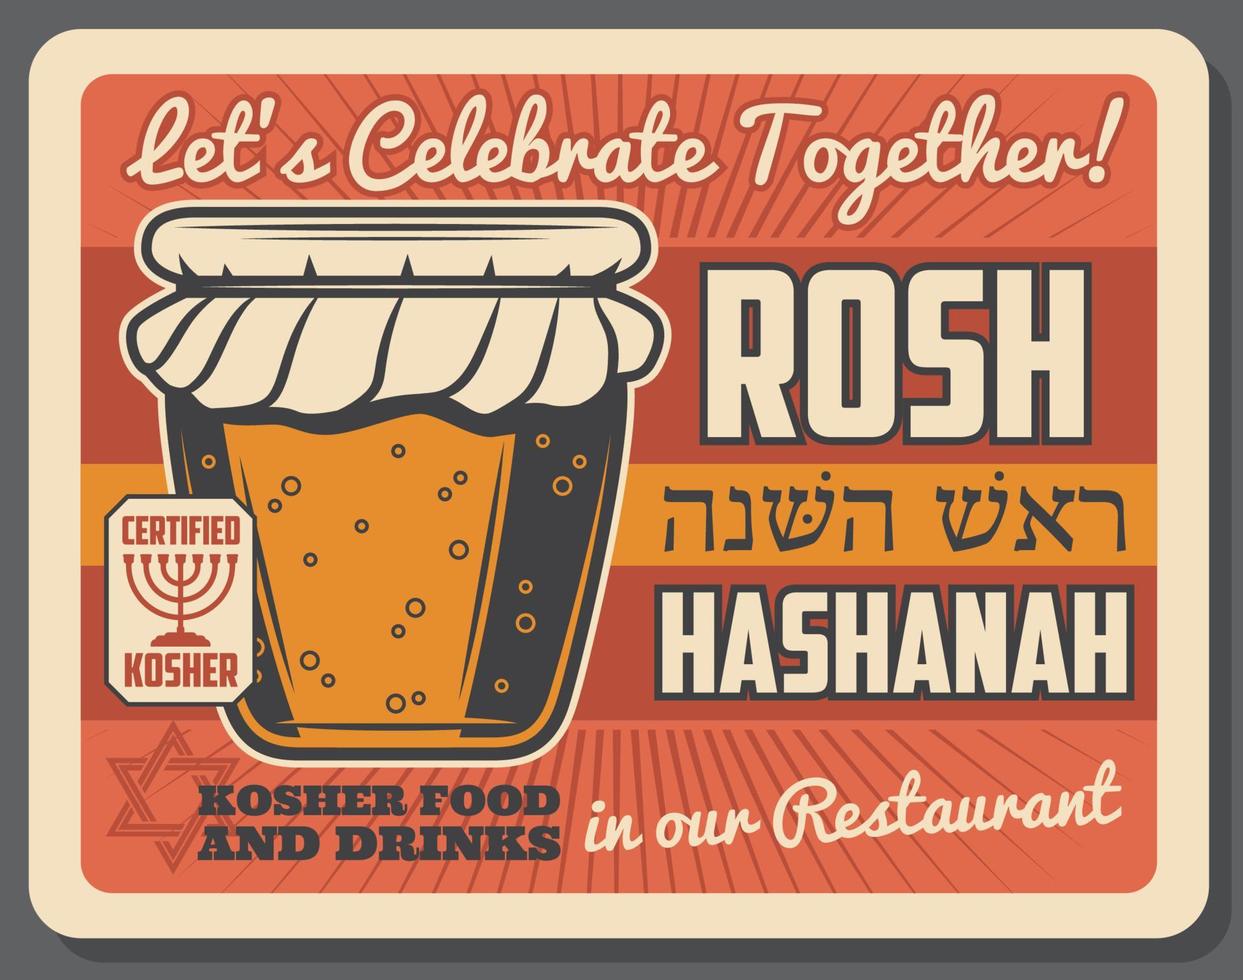 Jewish religious courses school retro poster vector